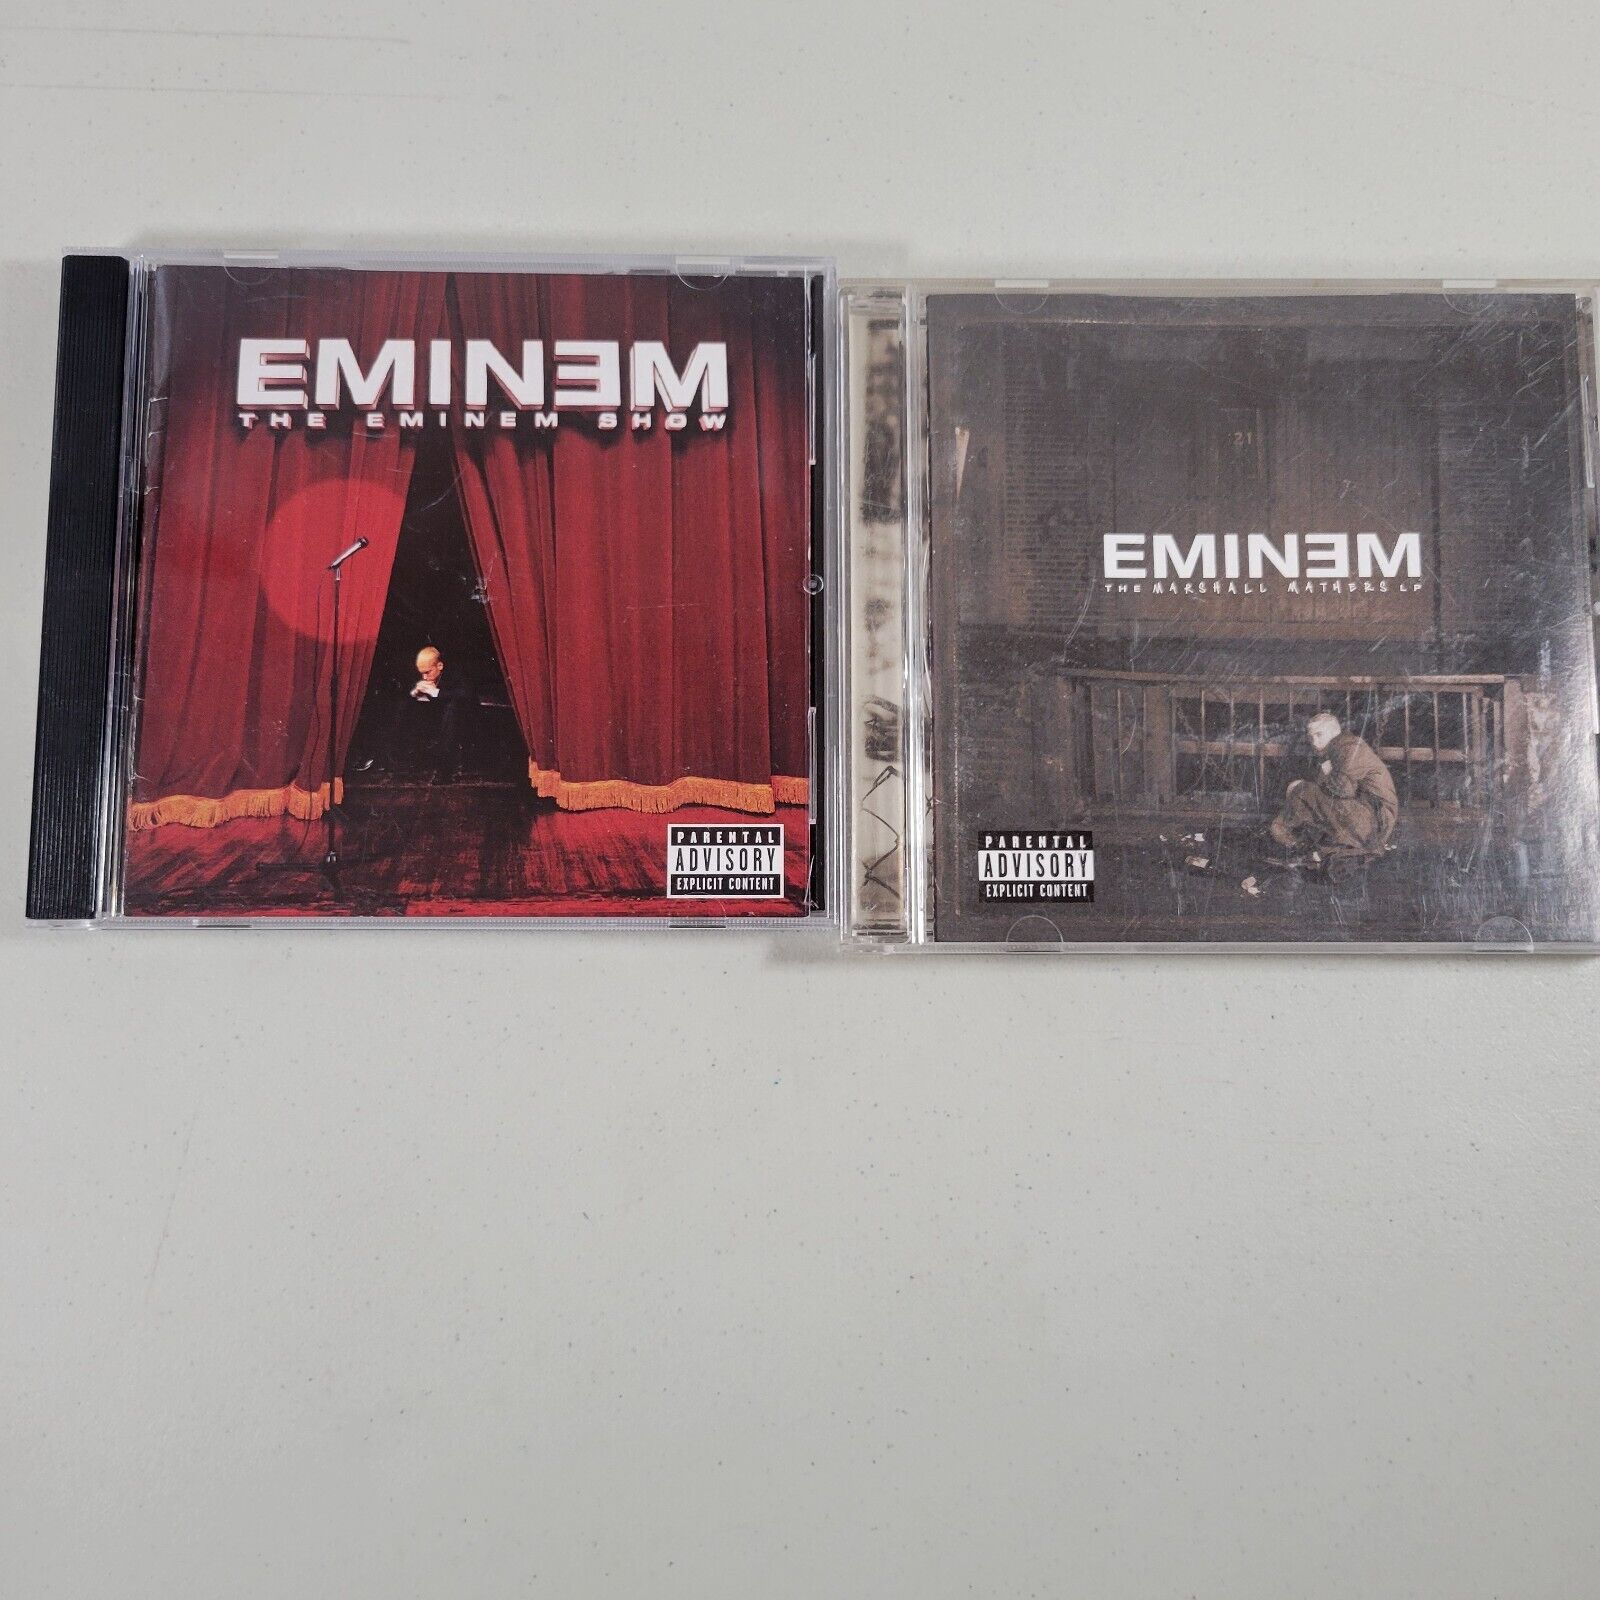 Eminem CD Lot The Marshall Mathers and The Eminem Show Parental Advisory